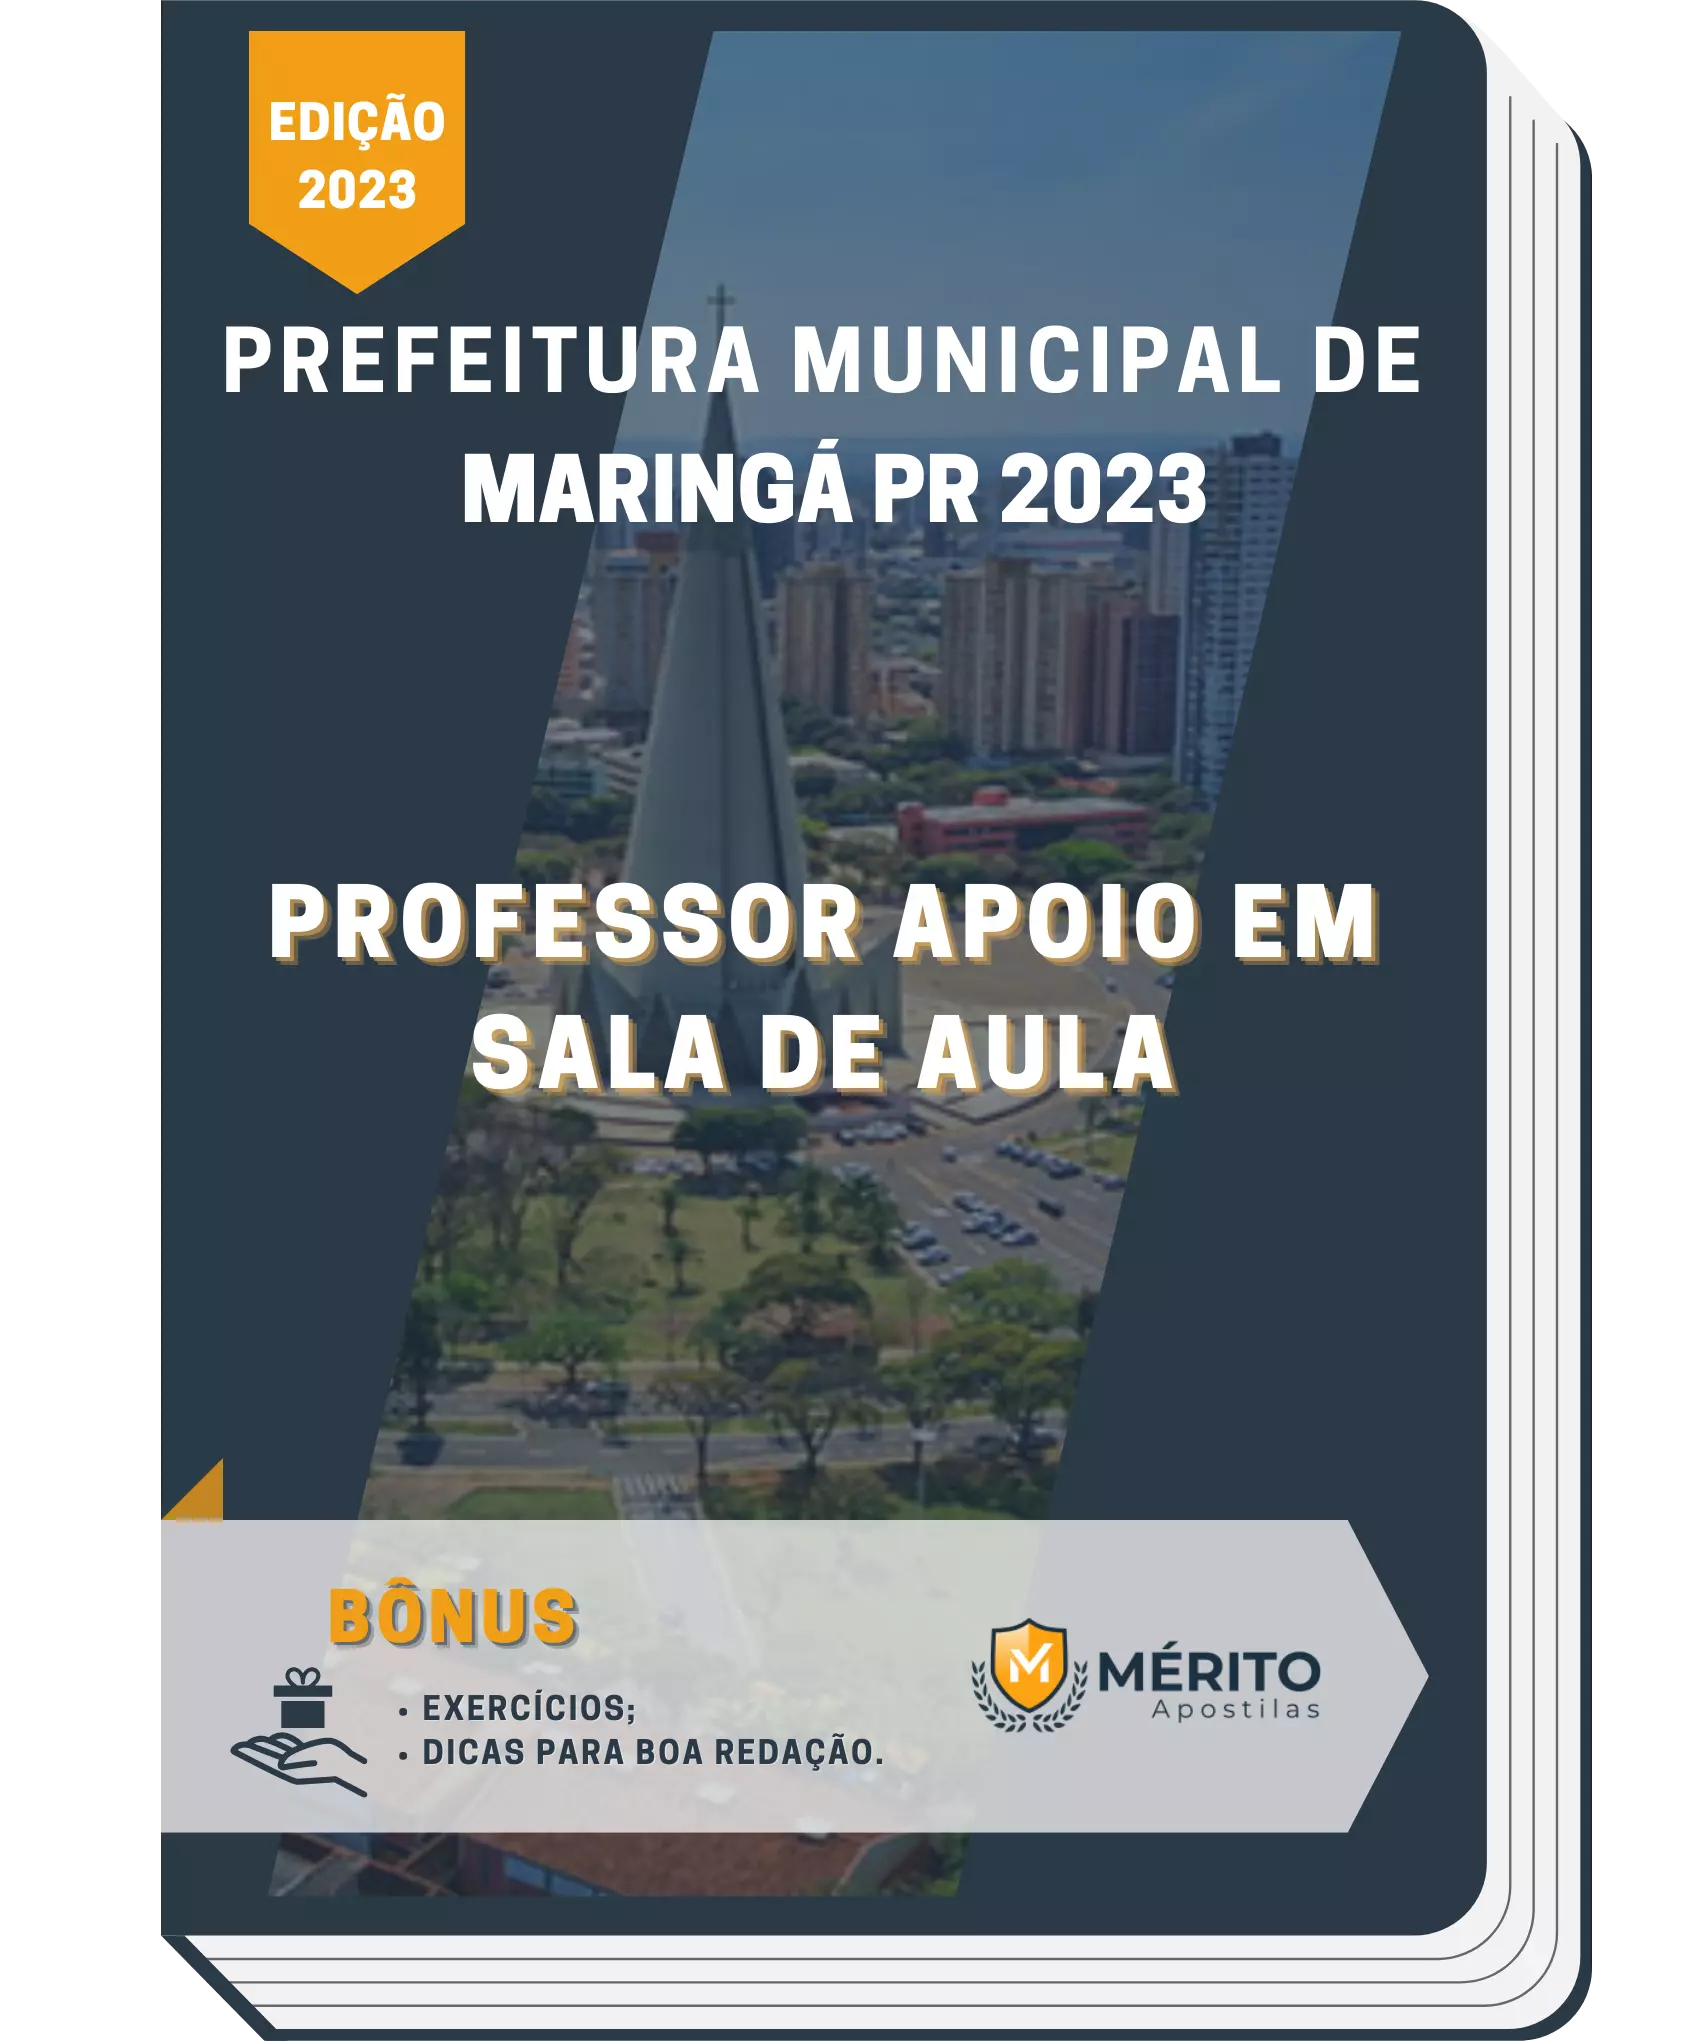 Prefeitura do Município de Maringá